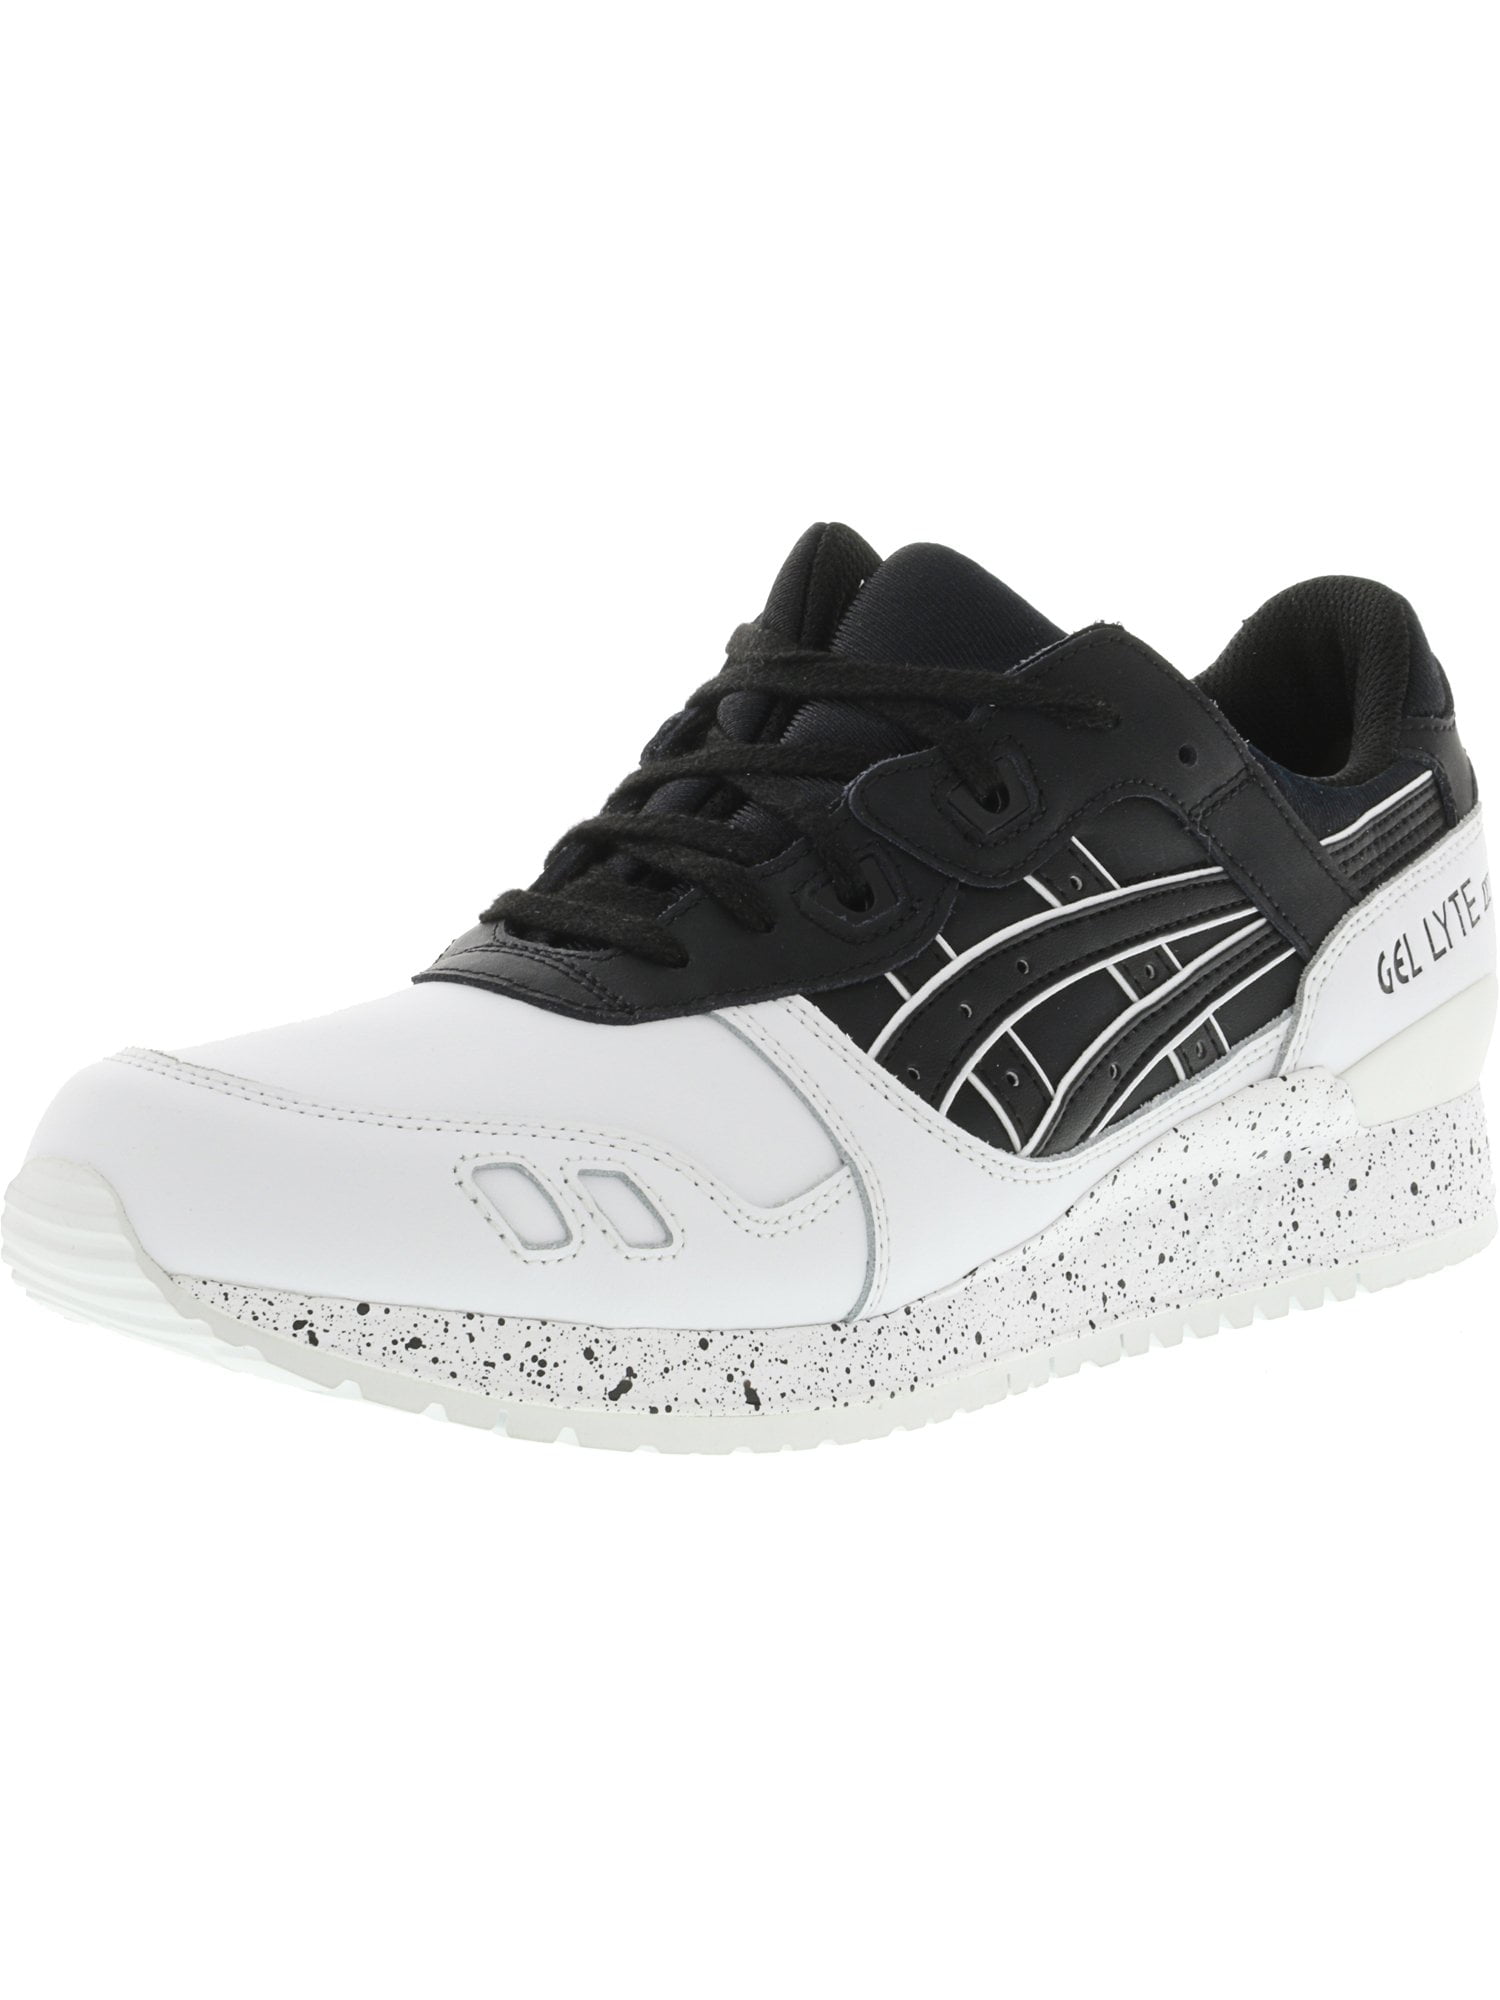 piek strand Manieren Asics Men's Gel-Lyte Iii Black / White Speckled Ankle-High Leather Running  Shoe - 8.5M - Walmart.com